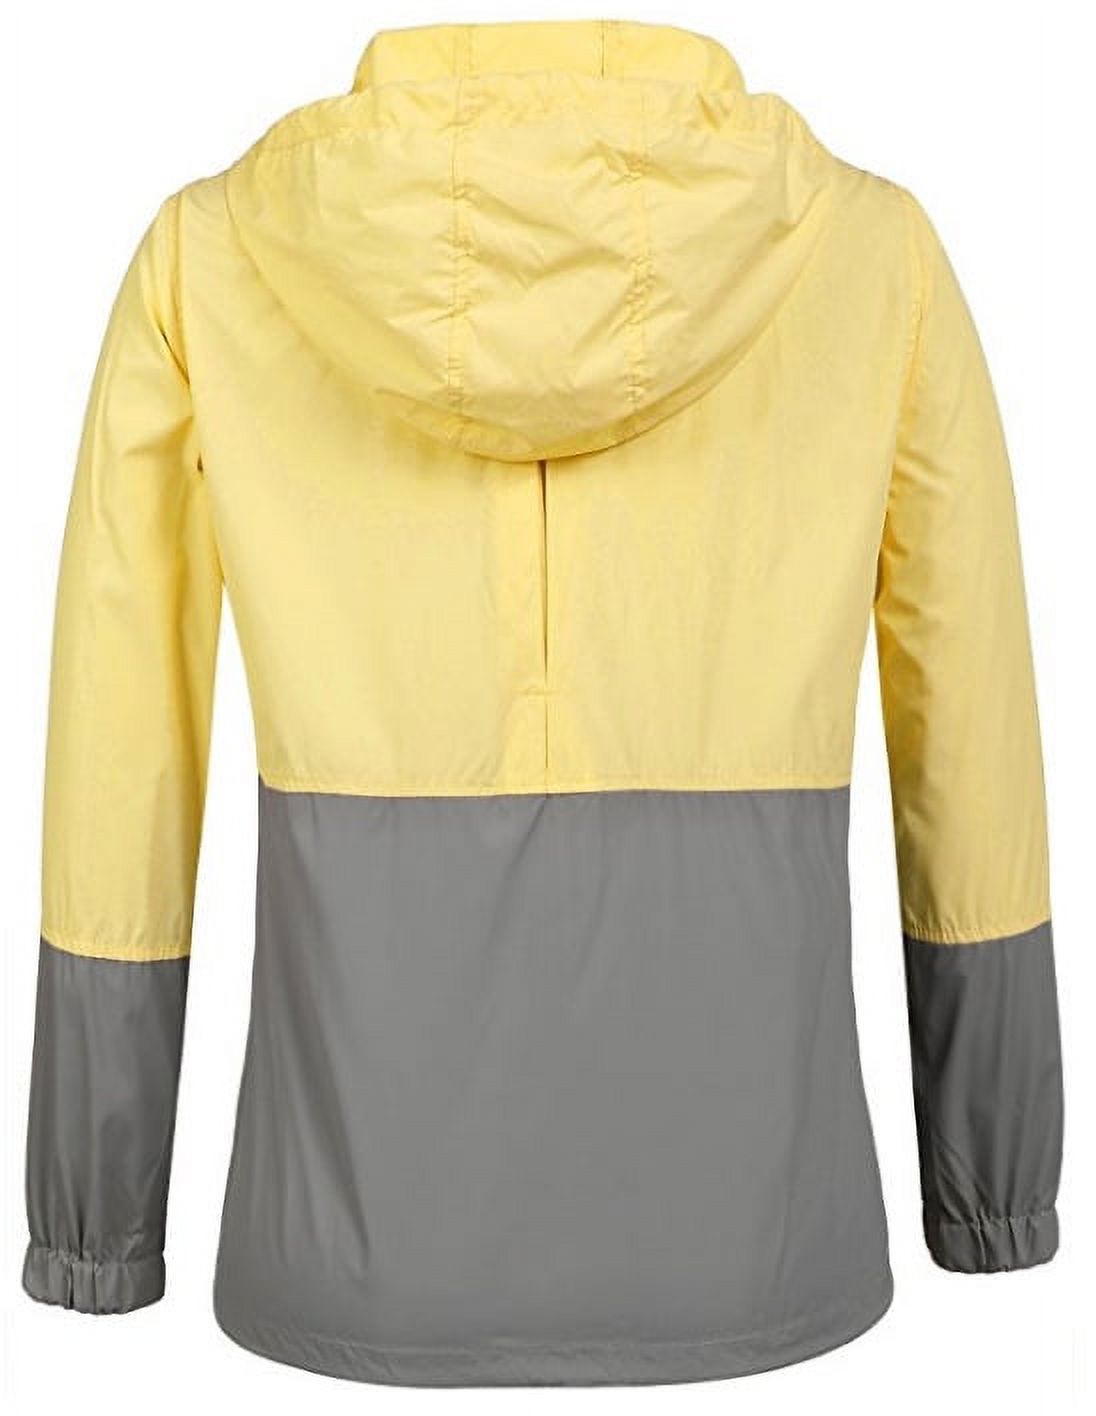 Springcmy Women´s Waterproof Raincoat Outdoor Hooded Rain Jacket Windbreaker - image 3 of 4